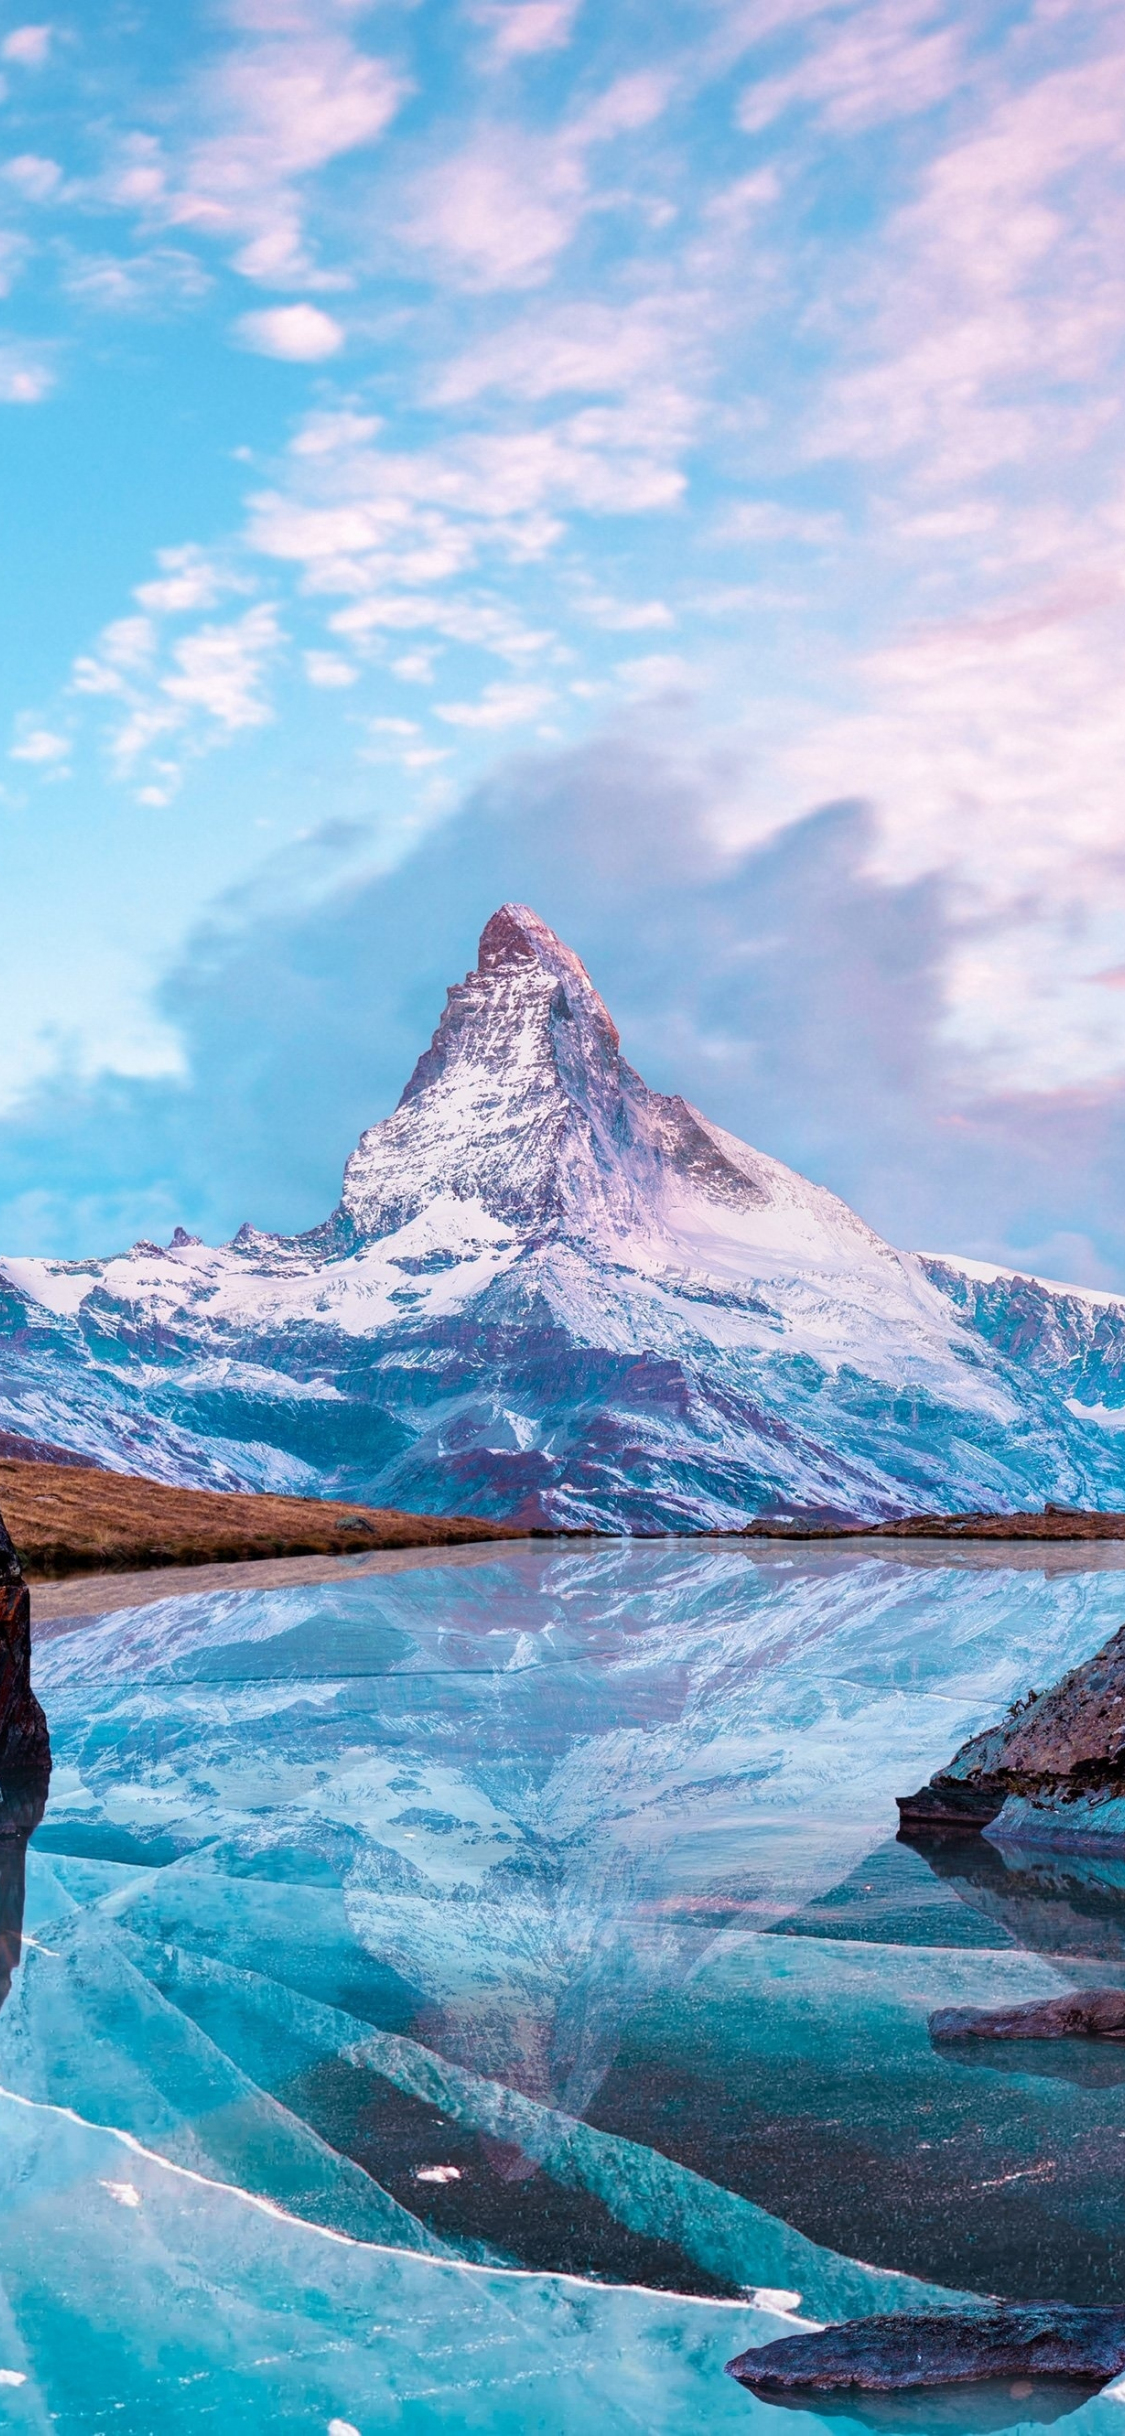 Download Matterhorn Mountains Nature Frozen Lake Reflection Winter 1125x2436 Wallpaper Iphone X 1125x2436 Hd Image Background 20847